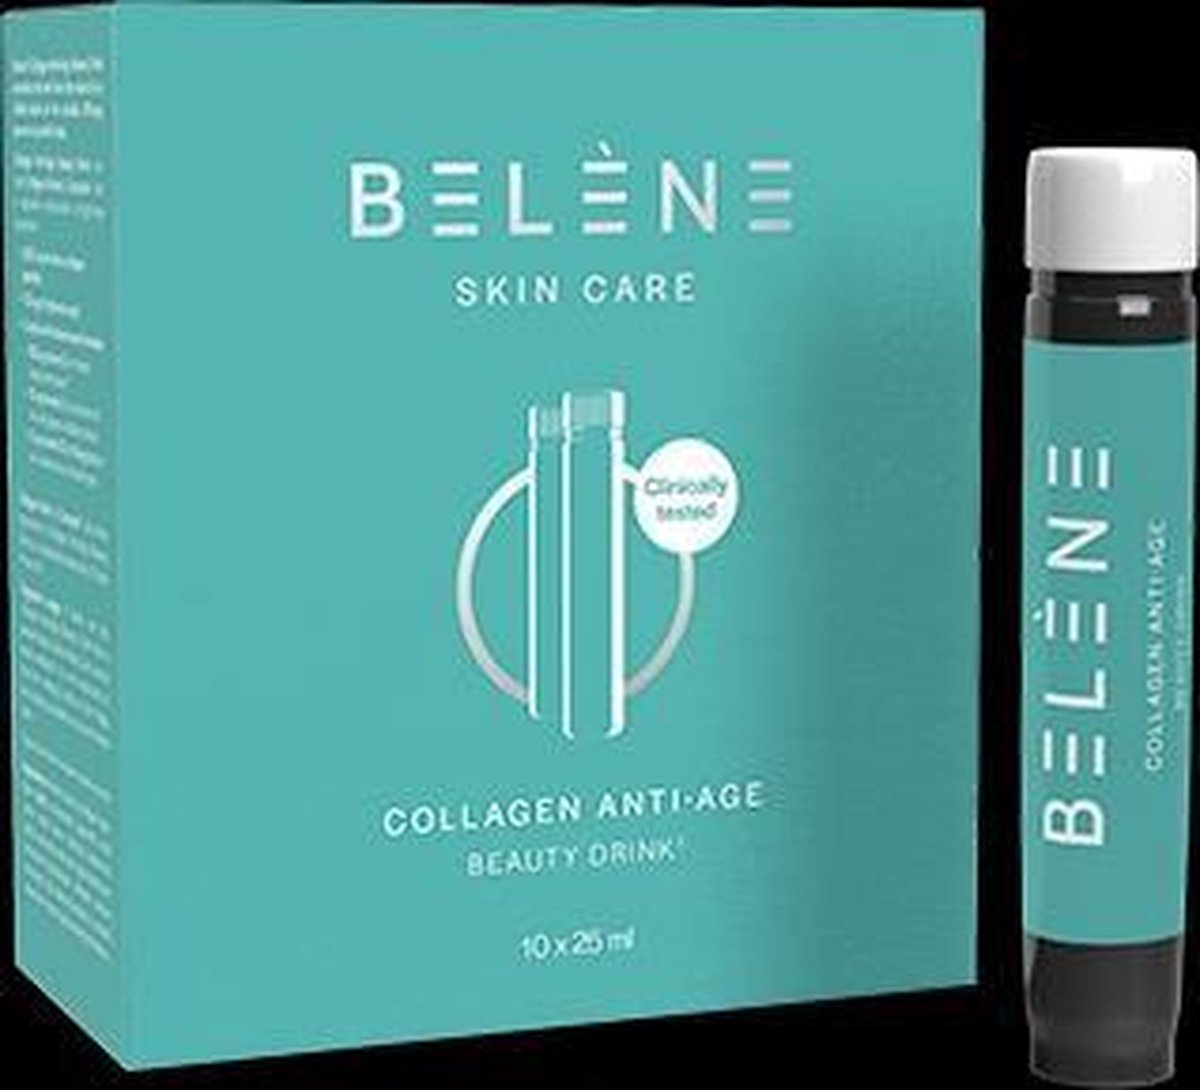 Belène Collagen Anti-Age Beauty Drink 10x25ml | bol.com